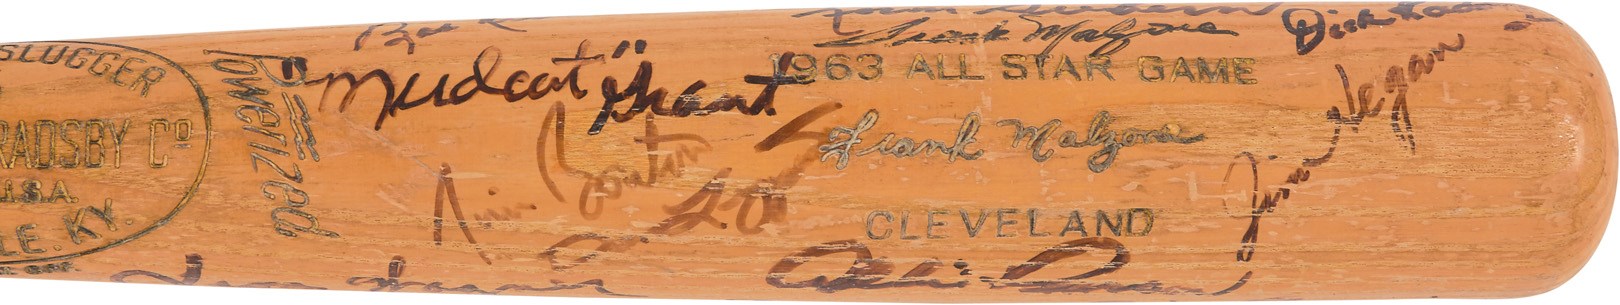 Baseball Autographs - 1963 Frank Malzone All-Star Game Team-Signed Bat (JSA)